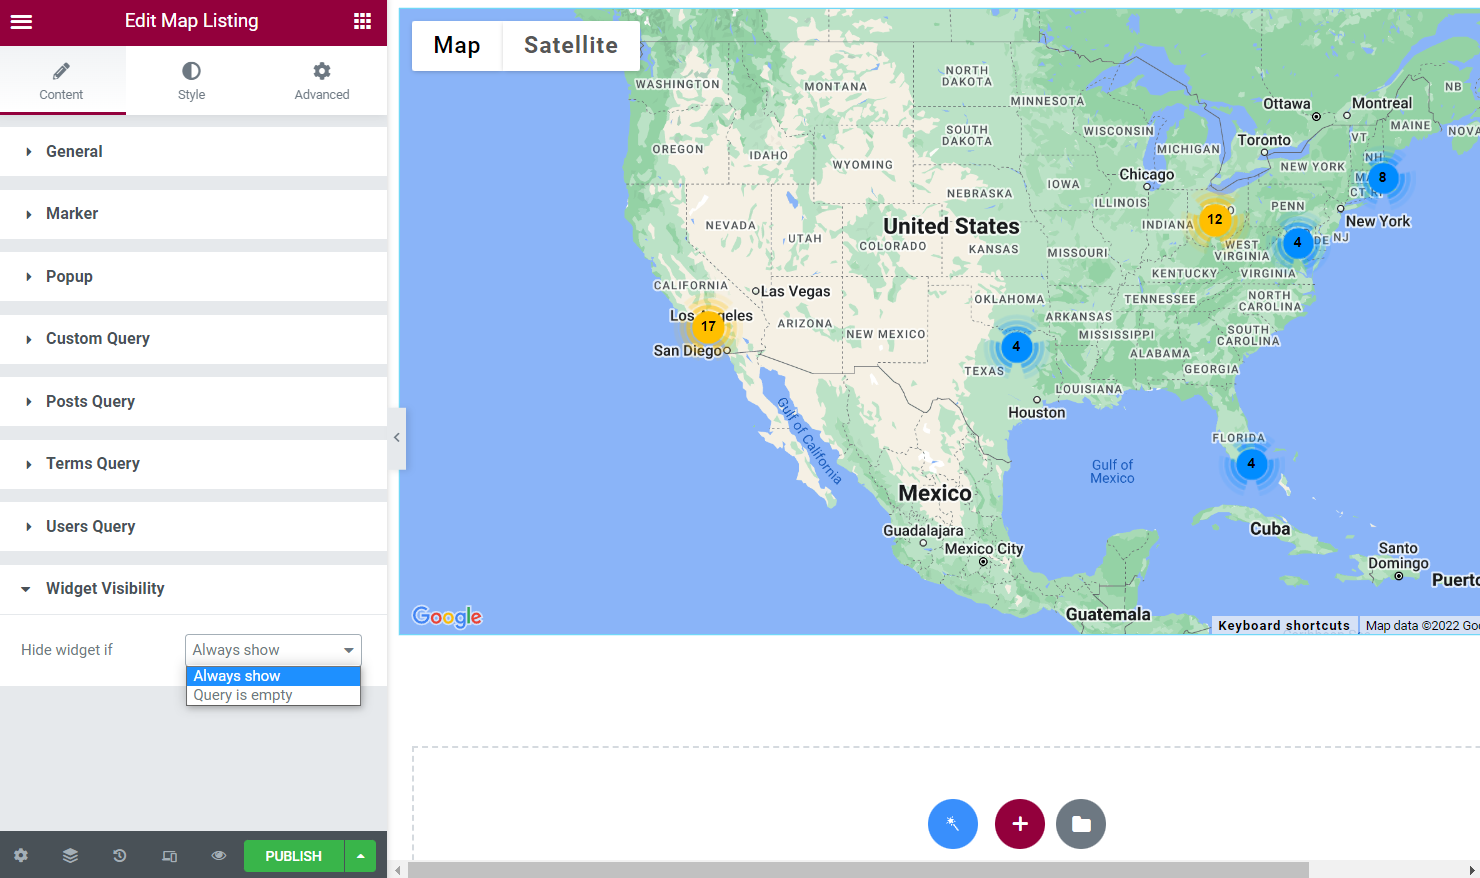 map listing widget visibility settings